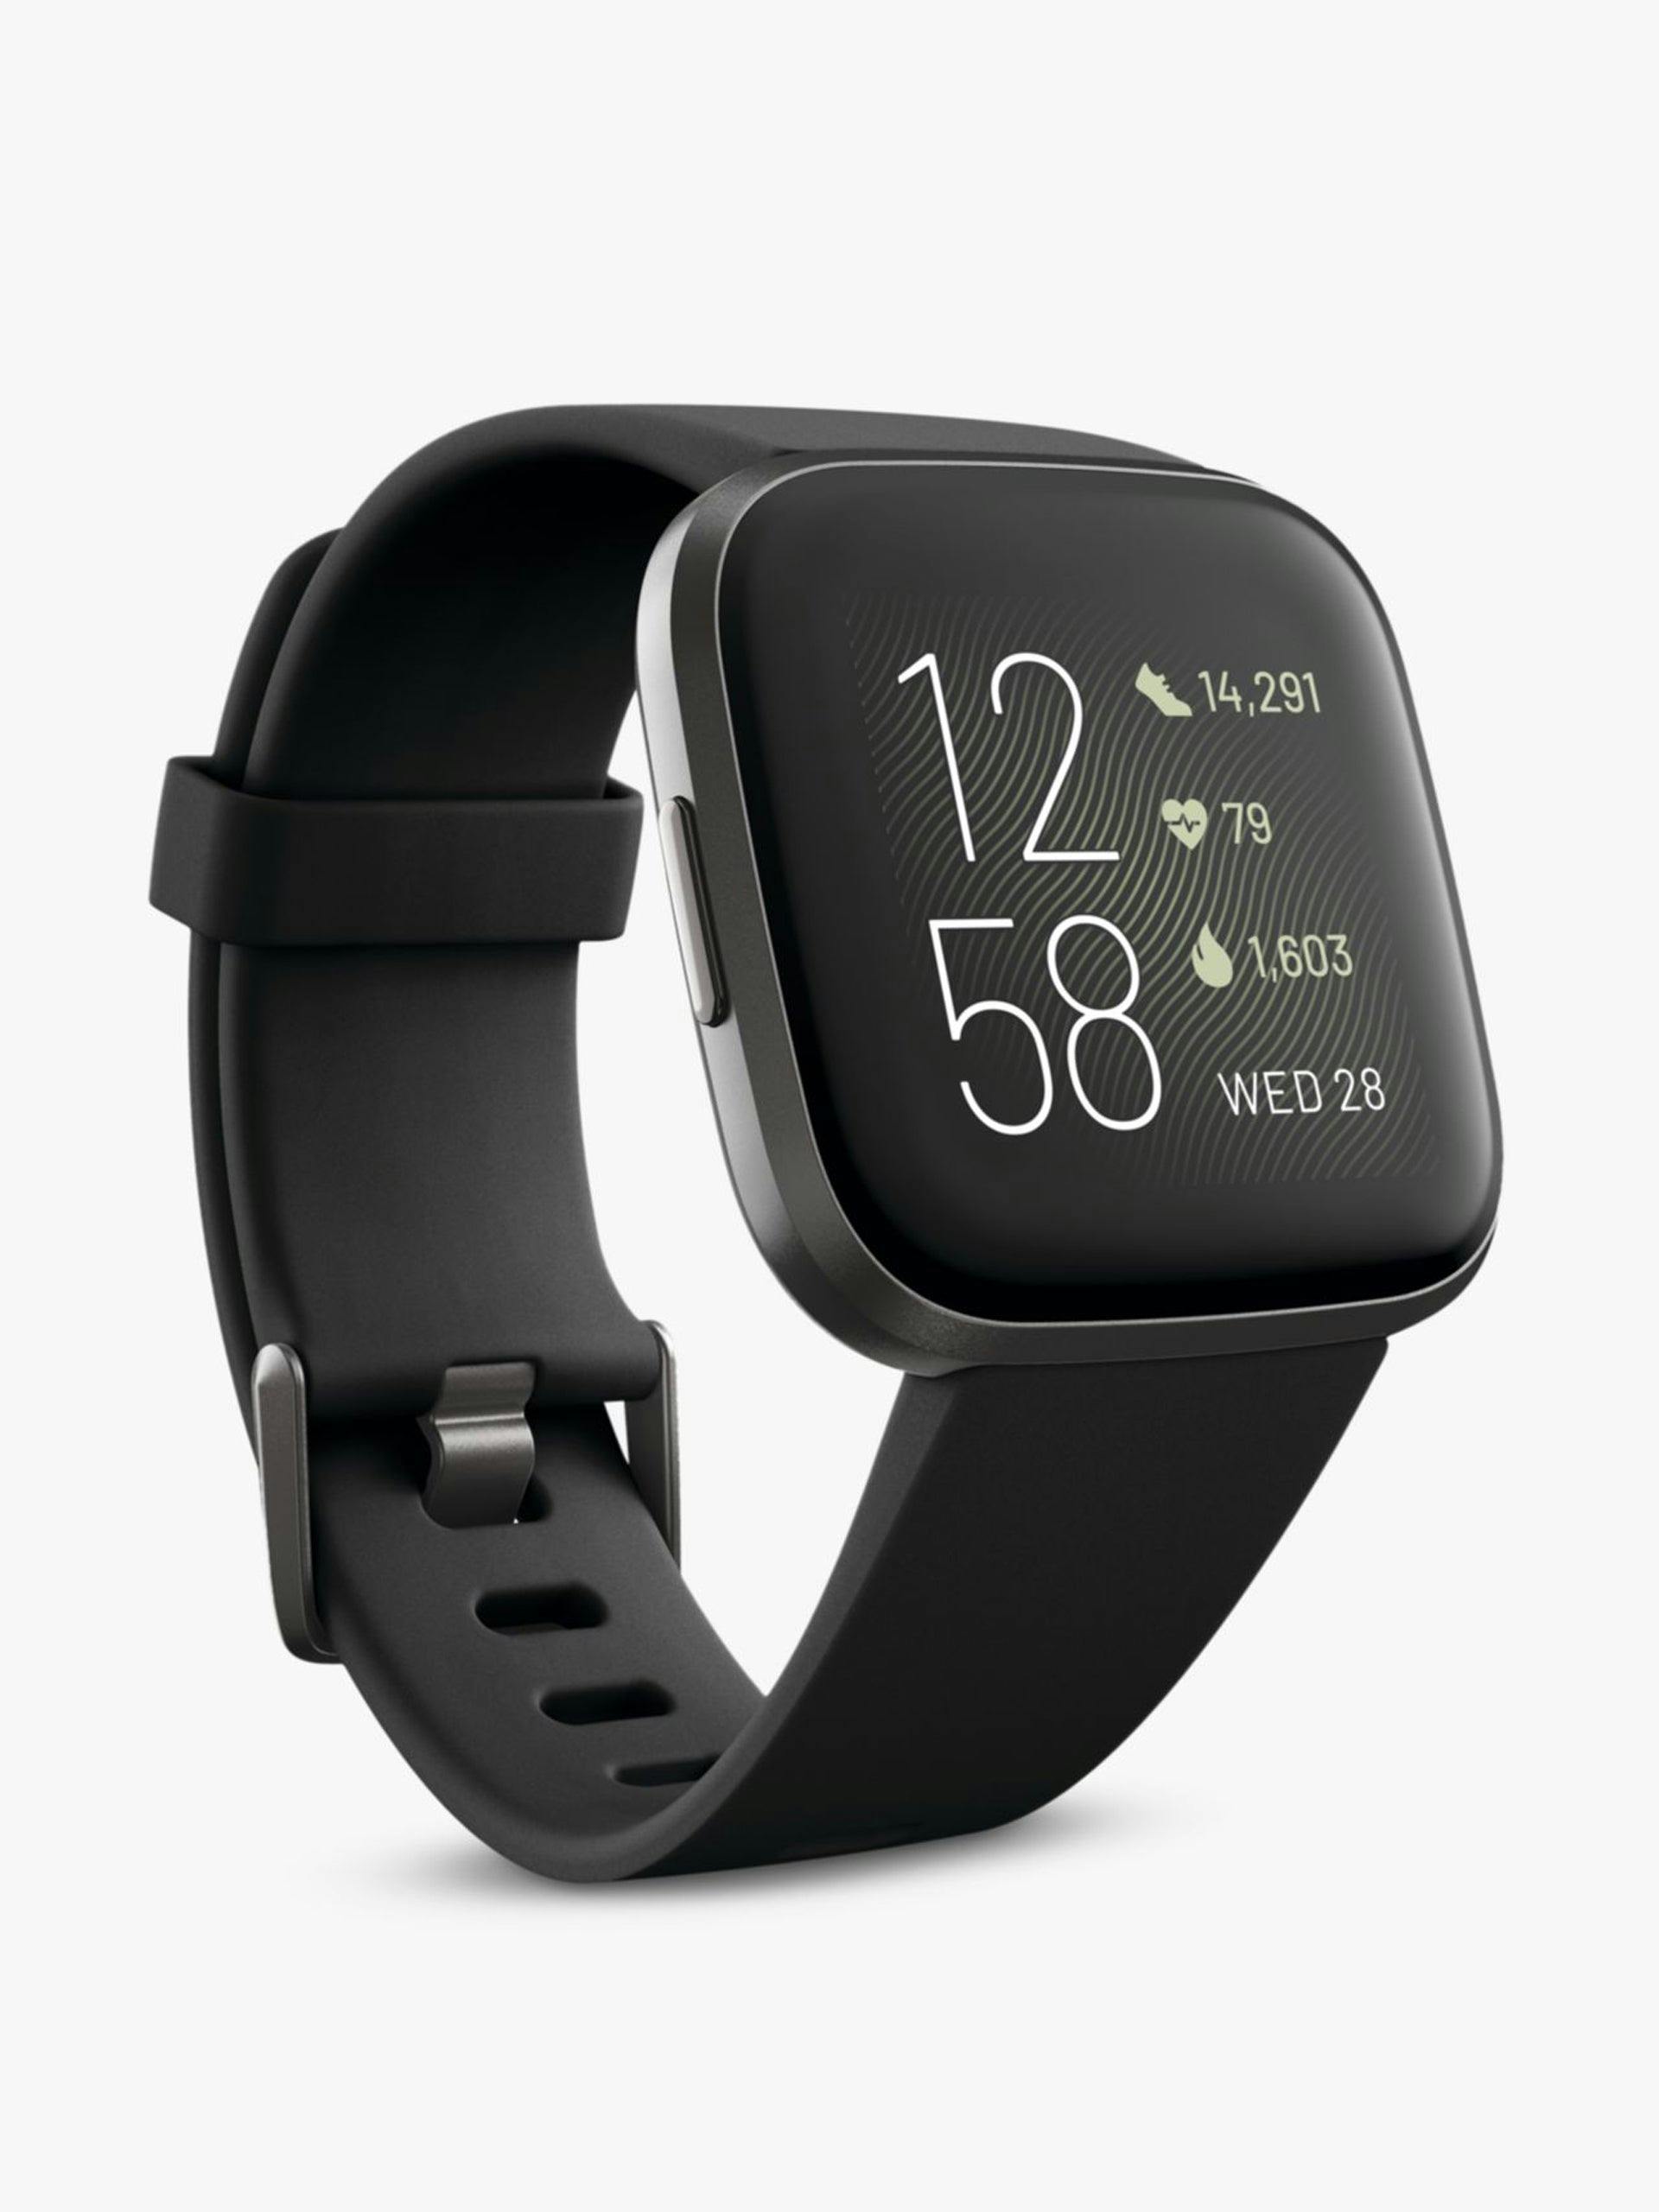 Fitbit Versa 2 health & fitness smartwatch